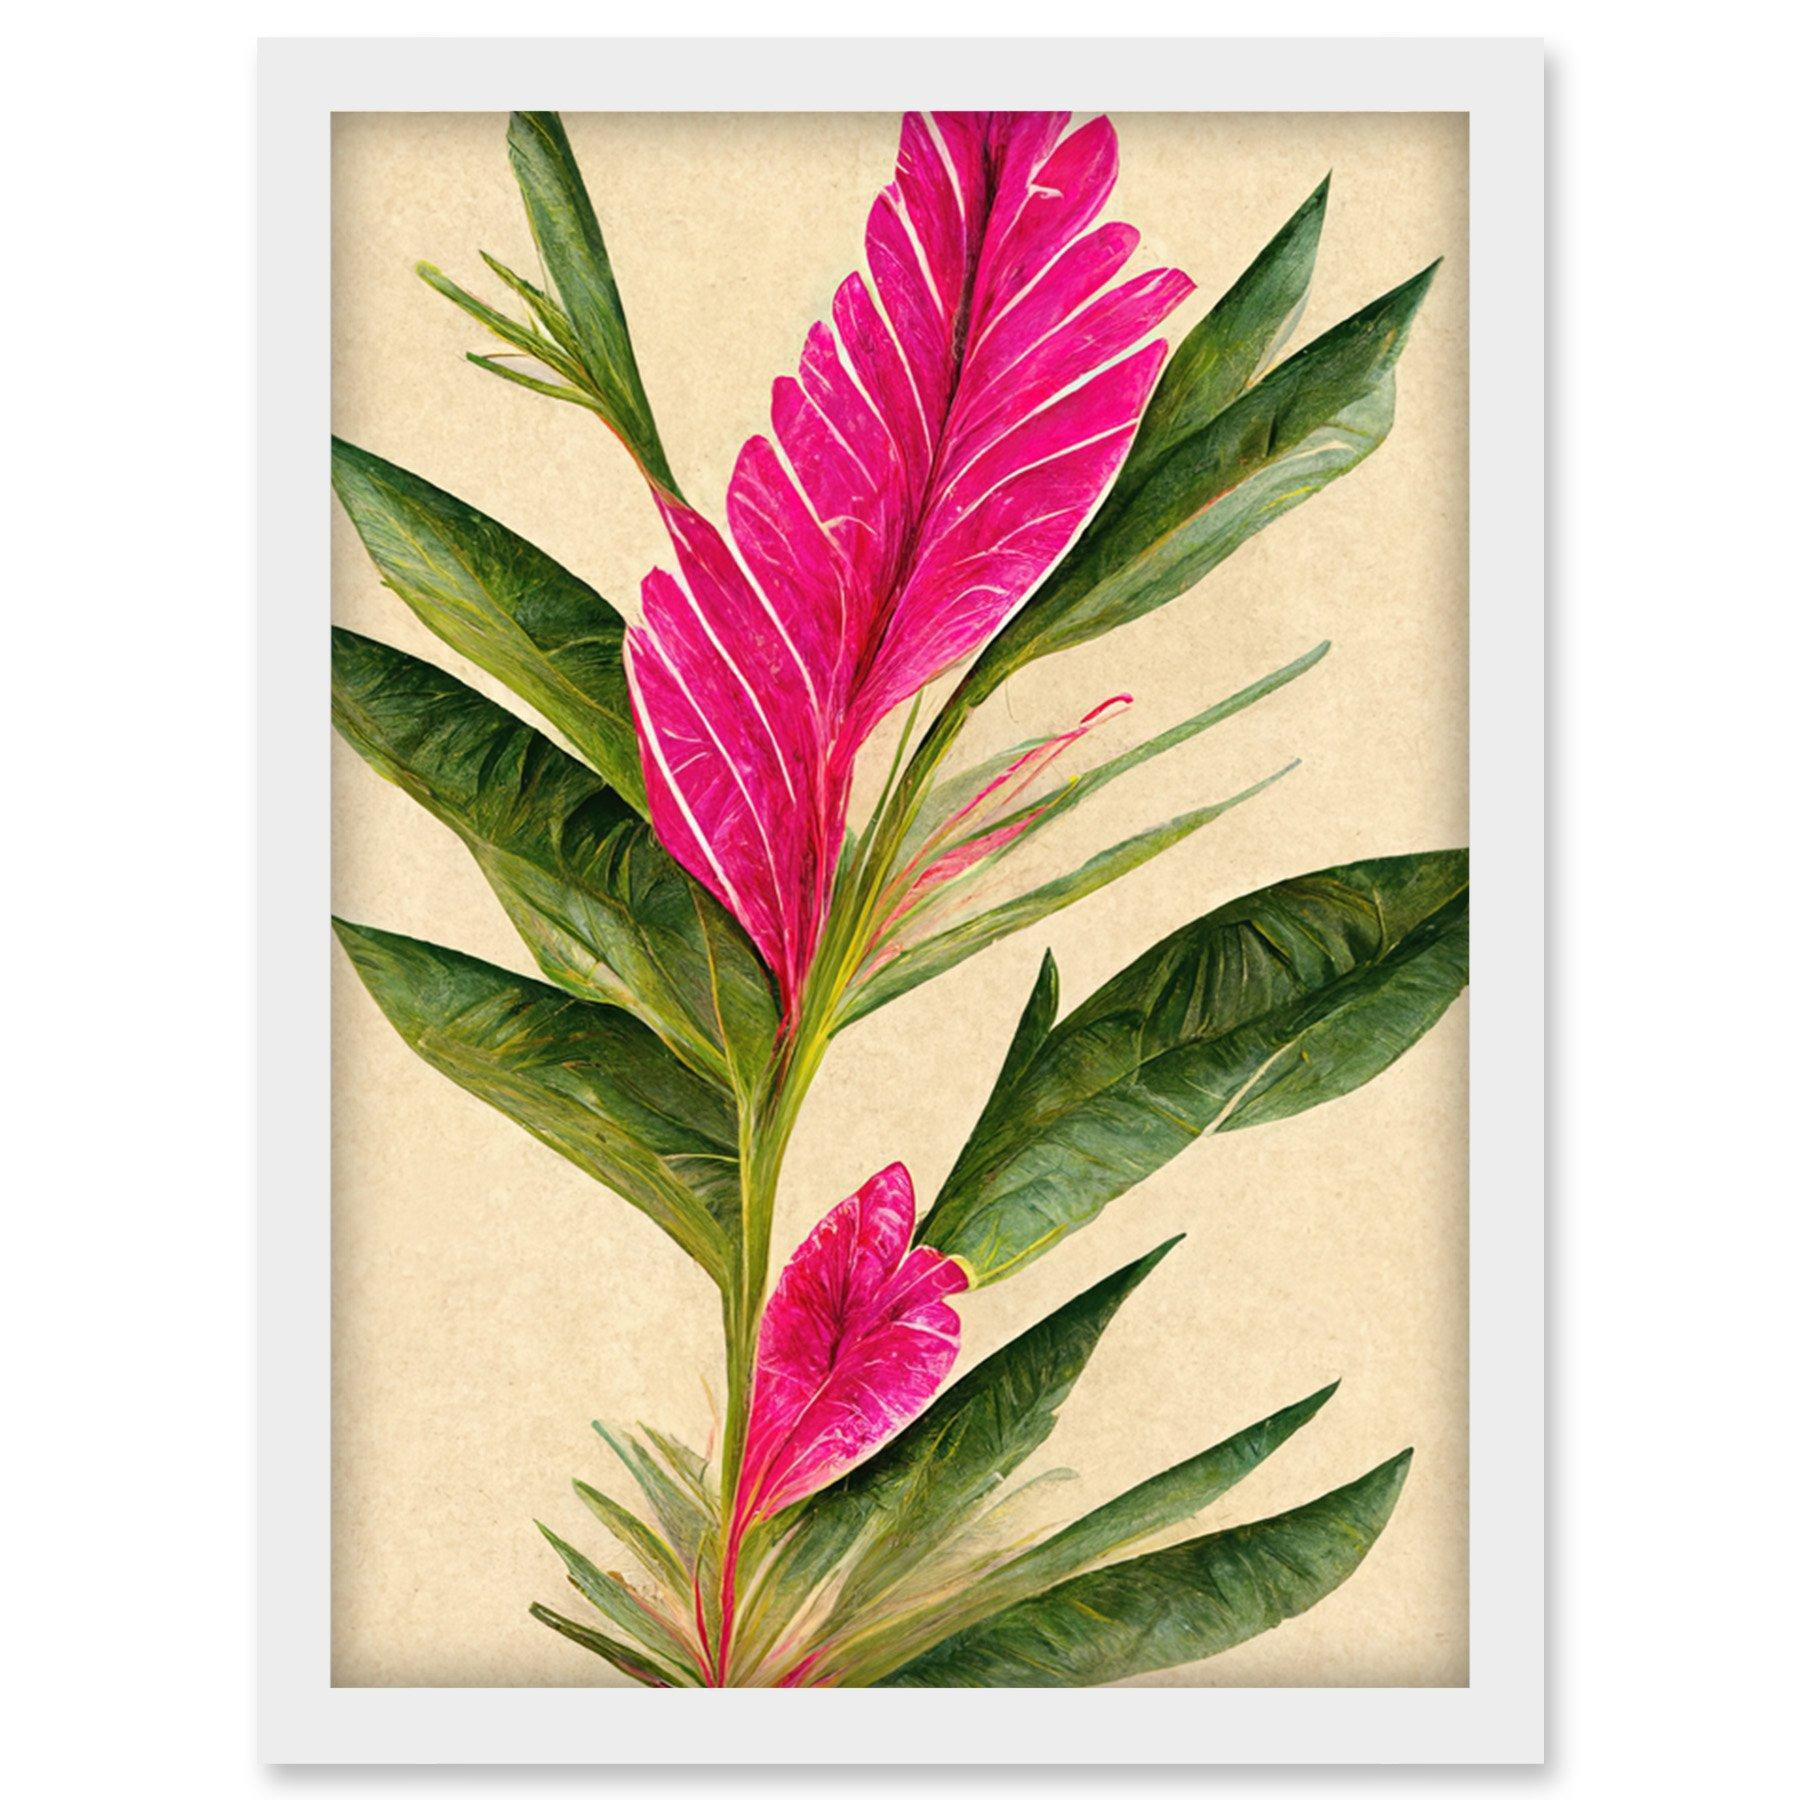 Hawaiian Flower Leaves Illustration In Fuchsia And Green Artwork Framed Wall Art Print A4 - image 1